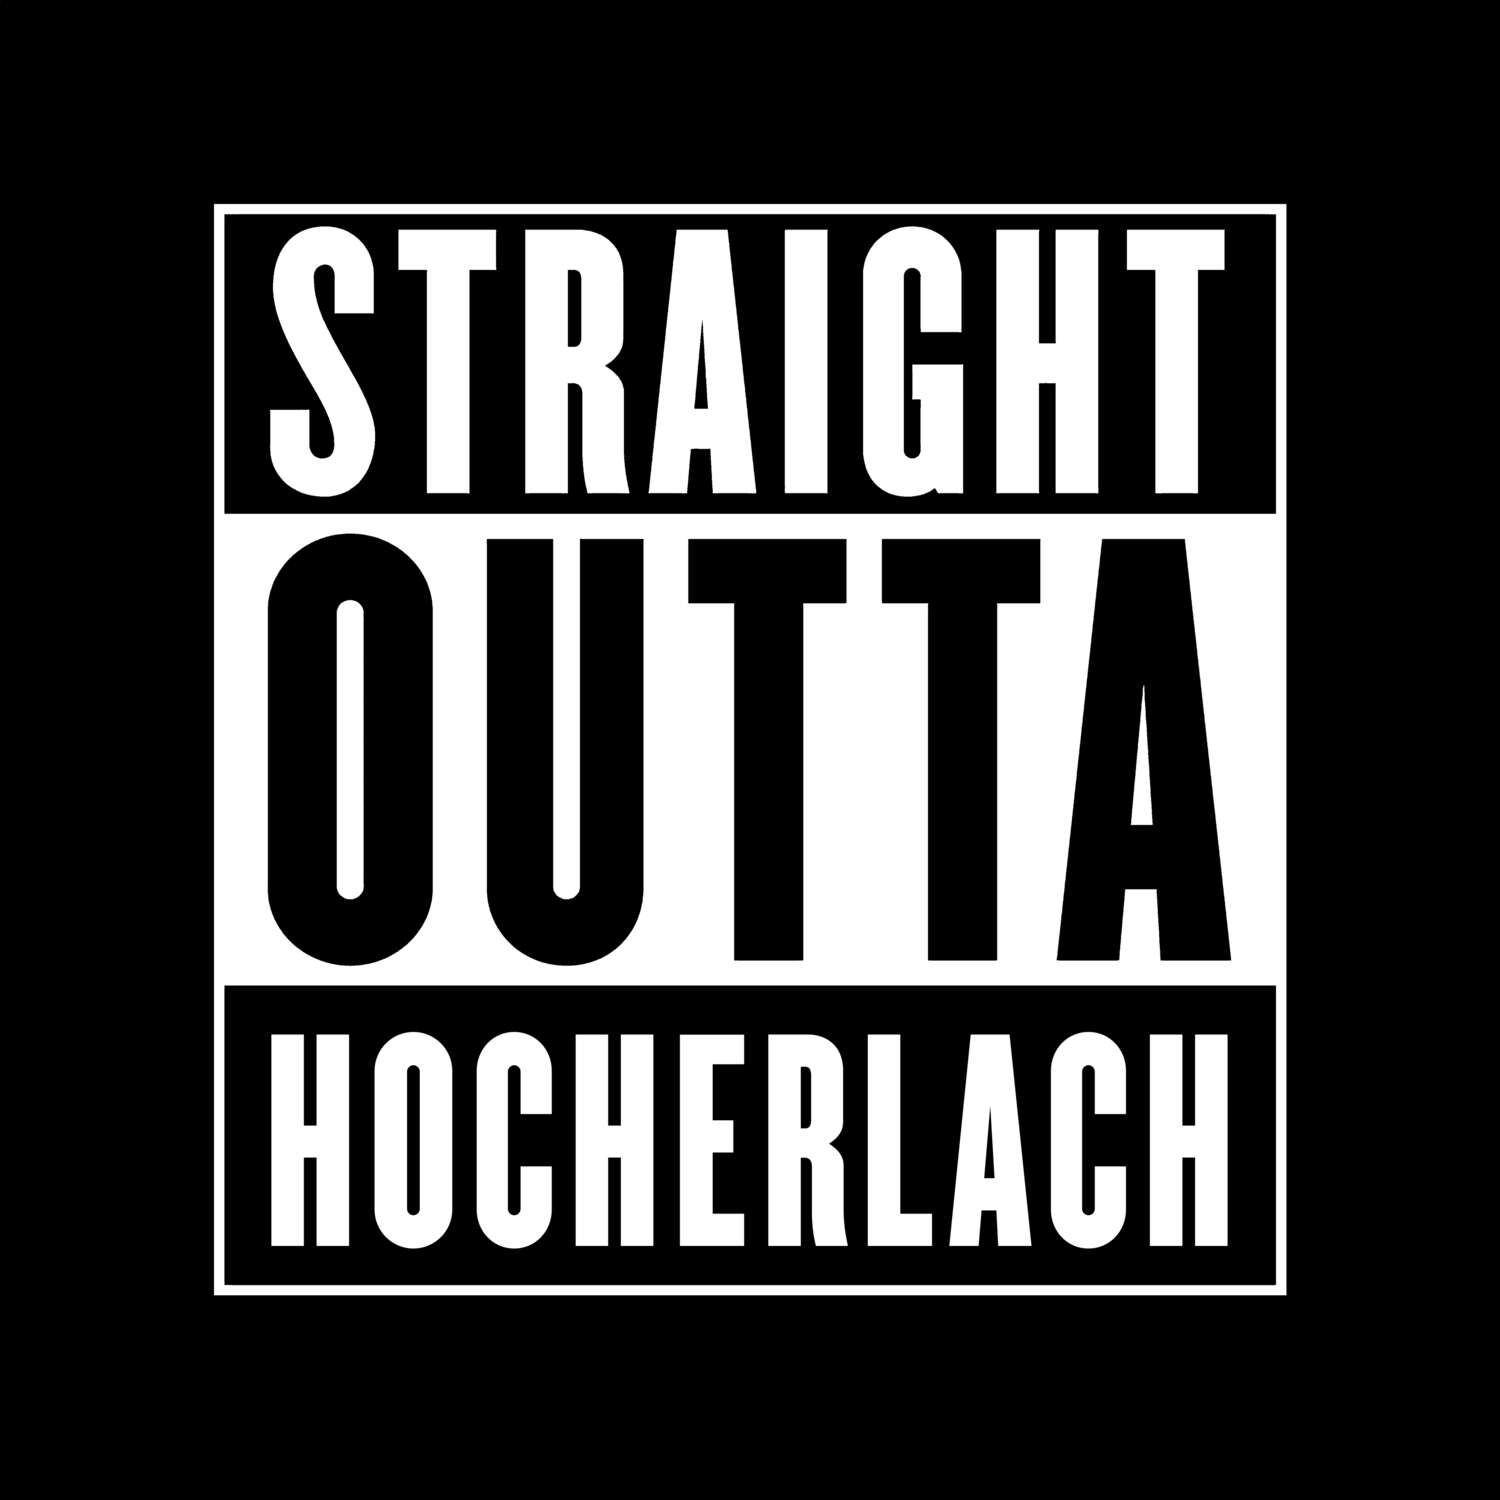 Hocherlach T-Shirt »Straight Outta«